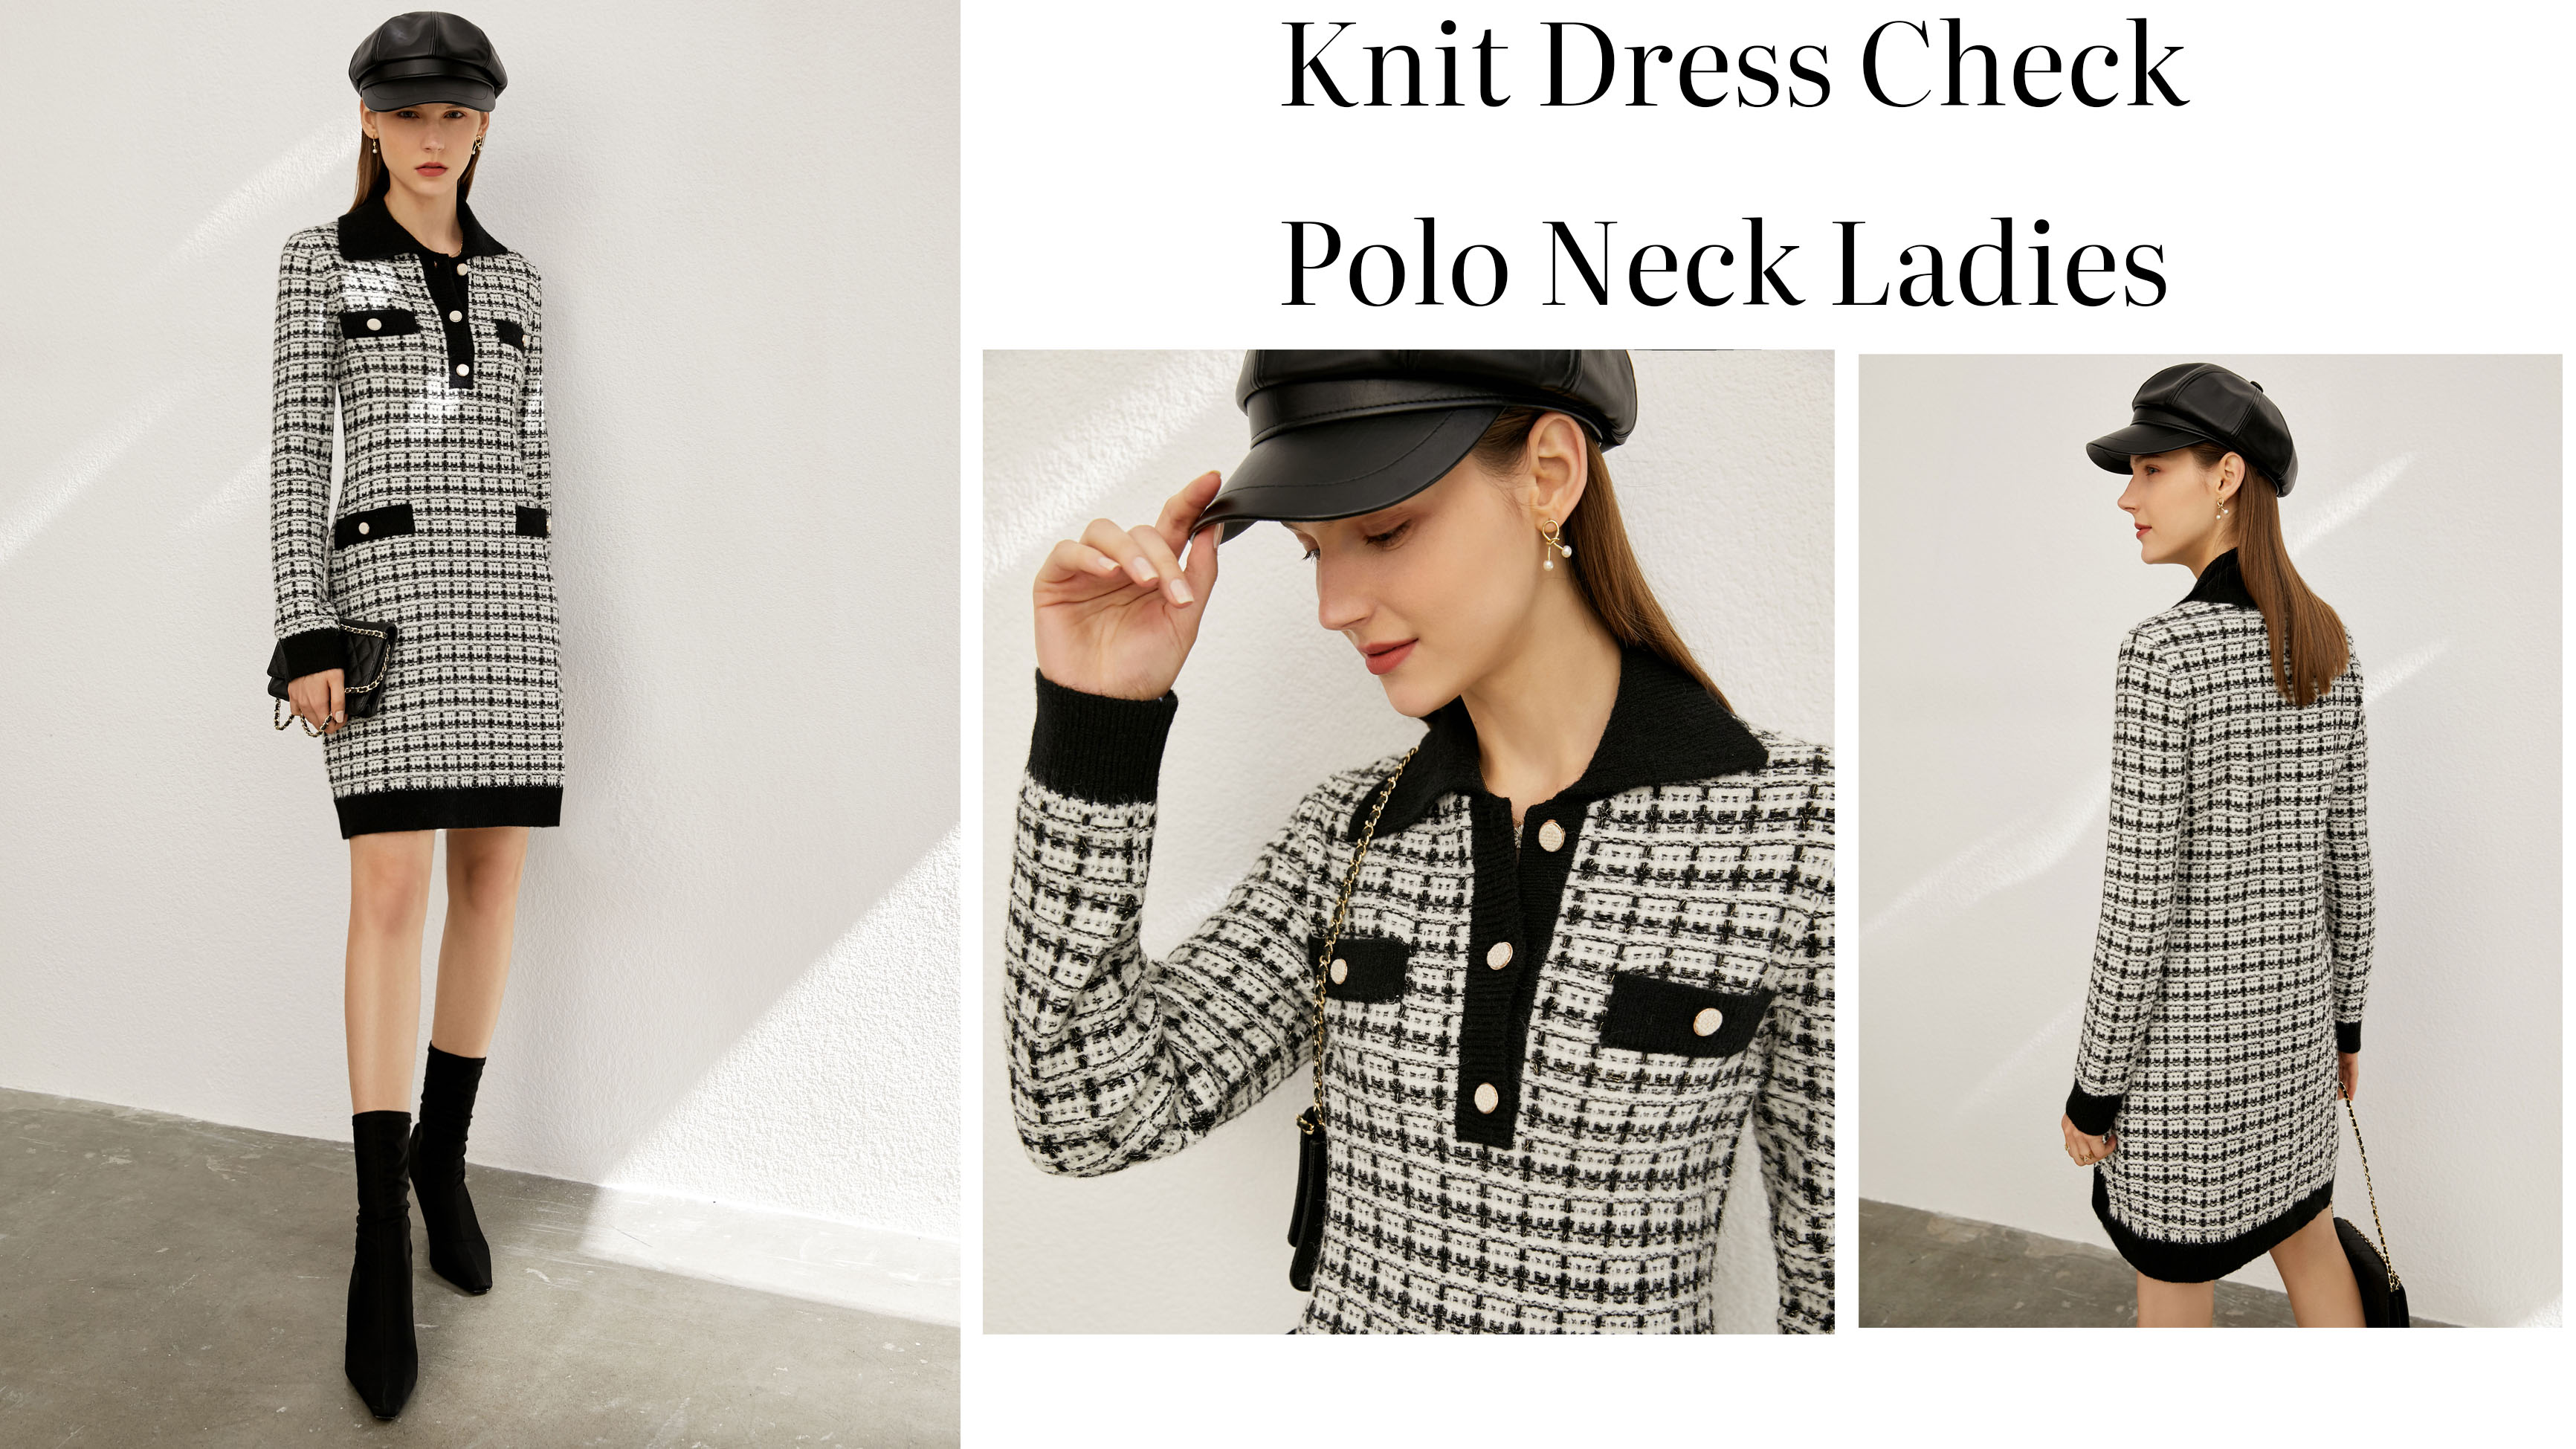 Quality Knit Dress Check Polo Neck Ladies Manufacturer |I-Auschalink